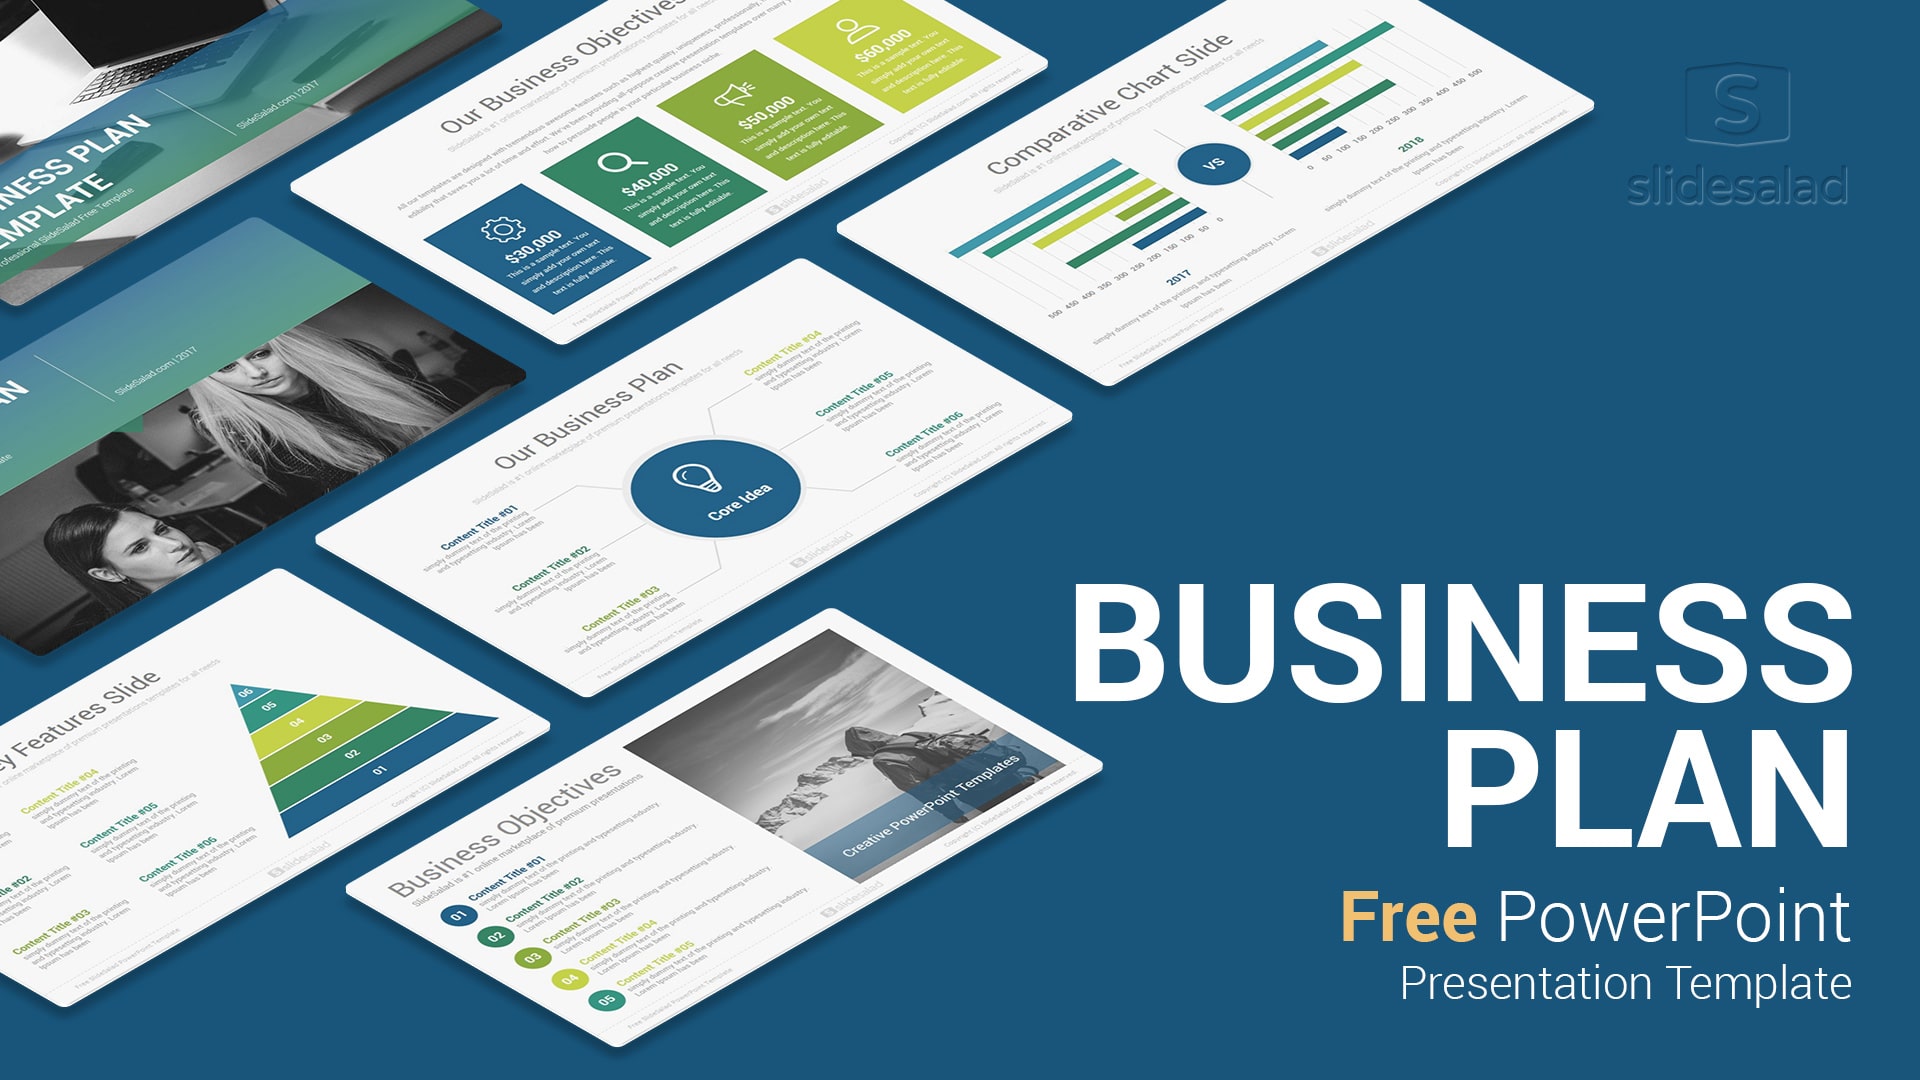 Business Plan Free PowerPoint Presentation Template - SlideSalad For Ppt Presentation Templates For Business